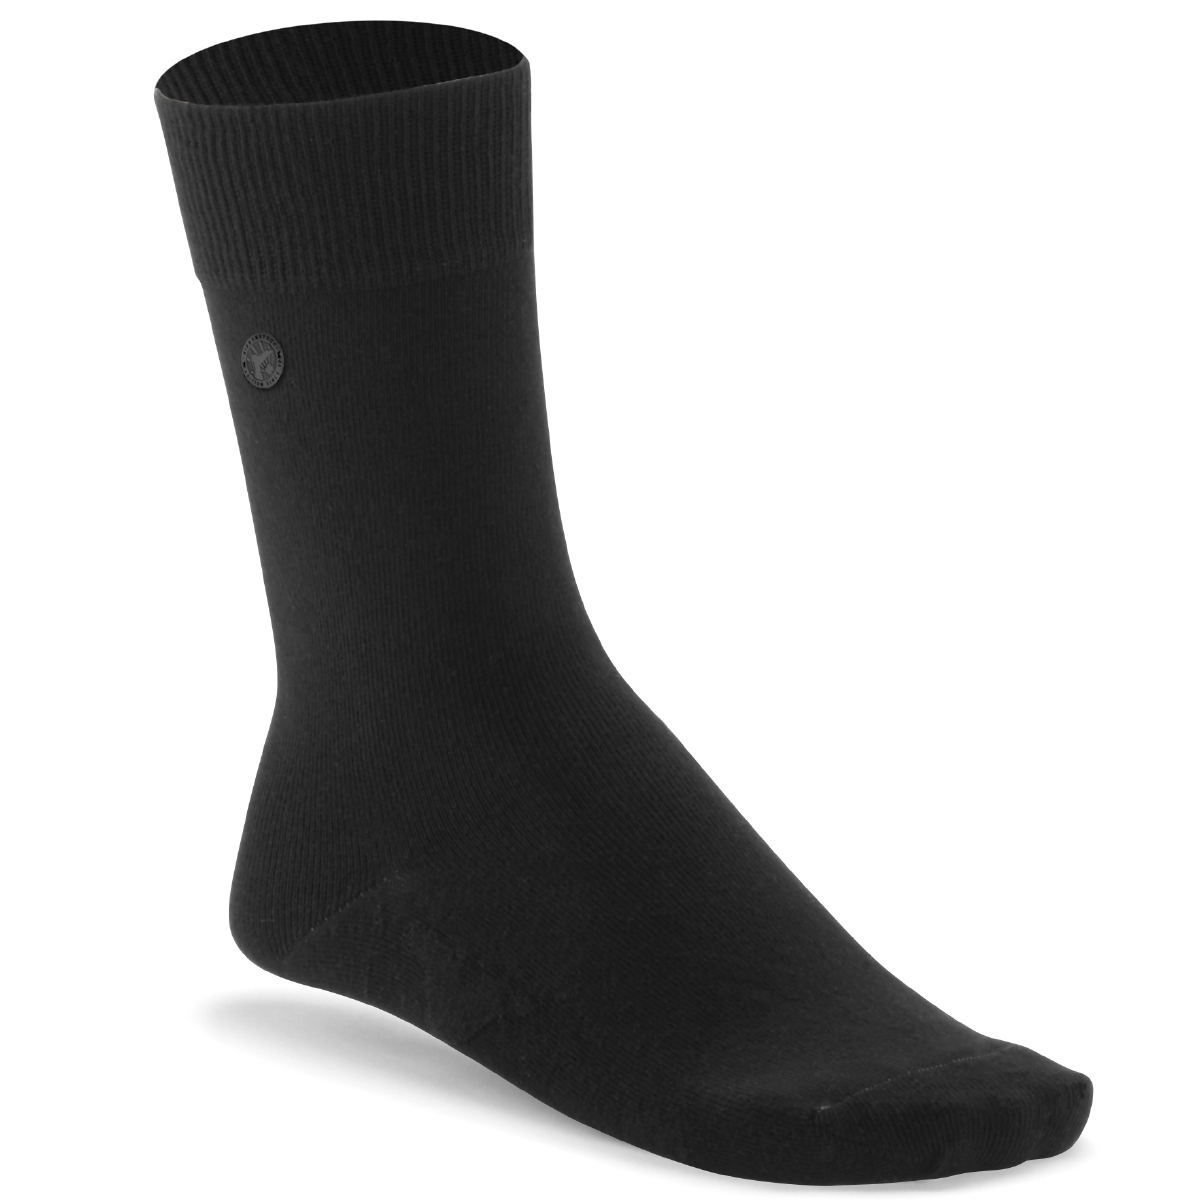 Birkenstock Cotton Sole Socken schwarz